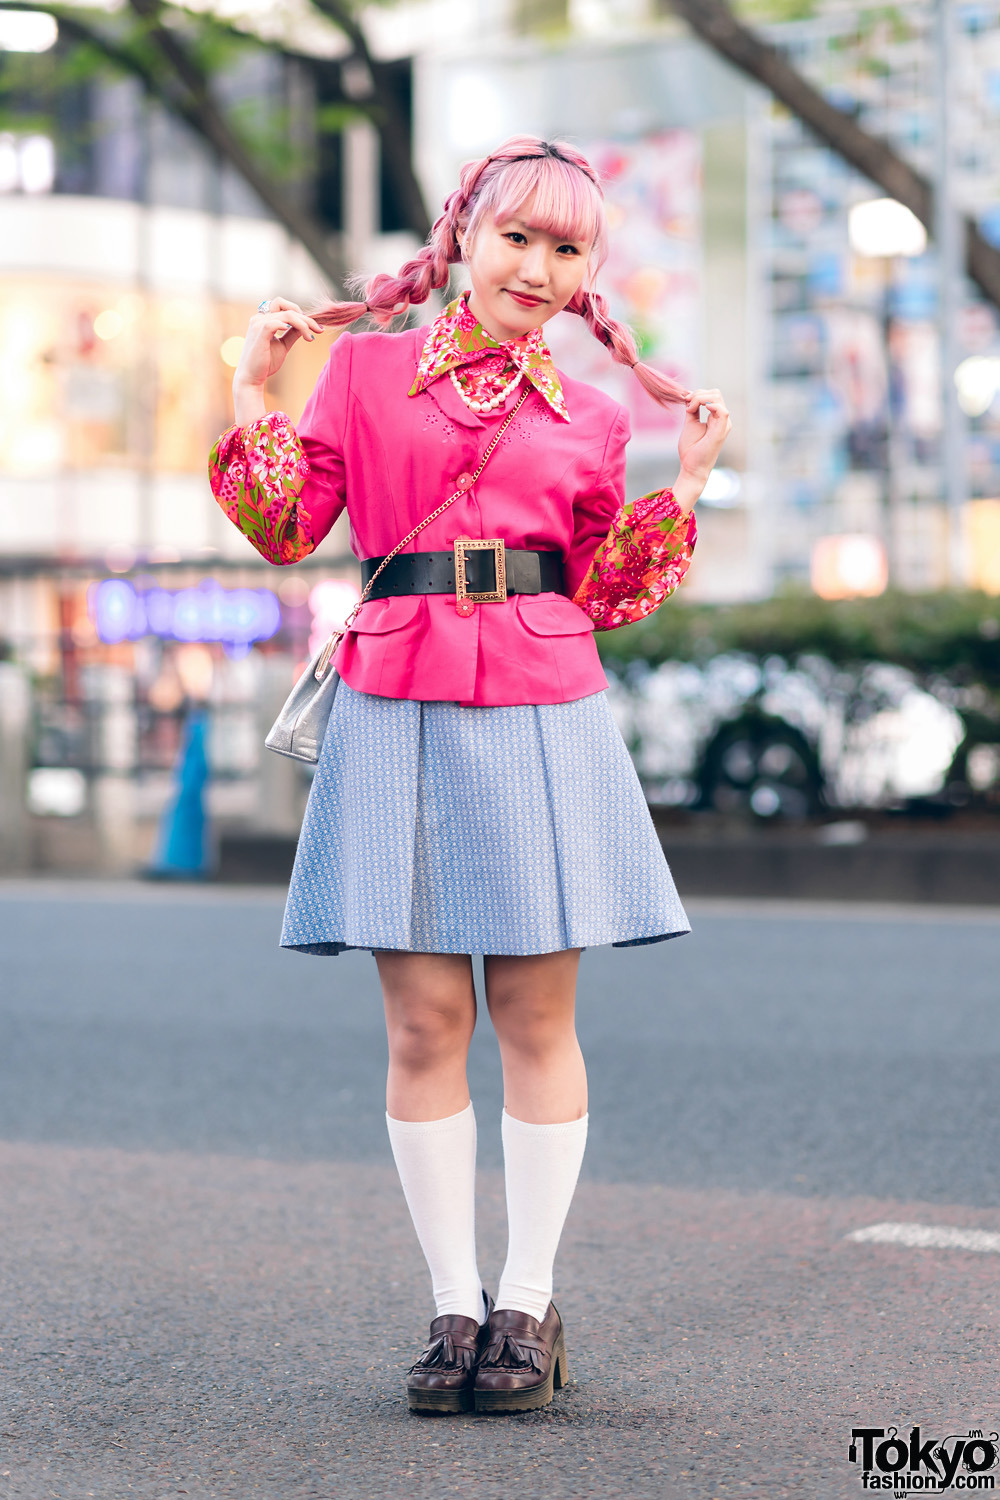 tokyo-fashion:  Japanese teens Ayane, Uchuuzin, Cheri, Riripon, Tipachan, Nana, and